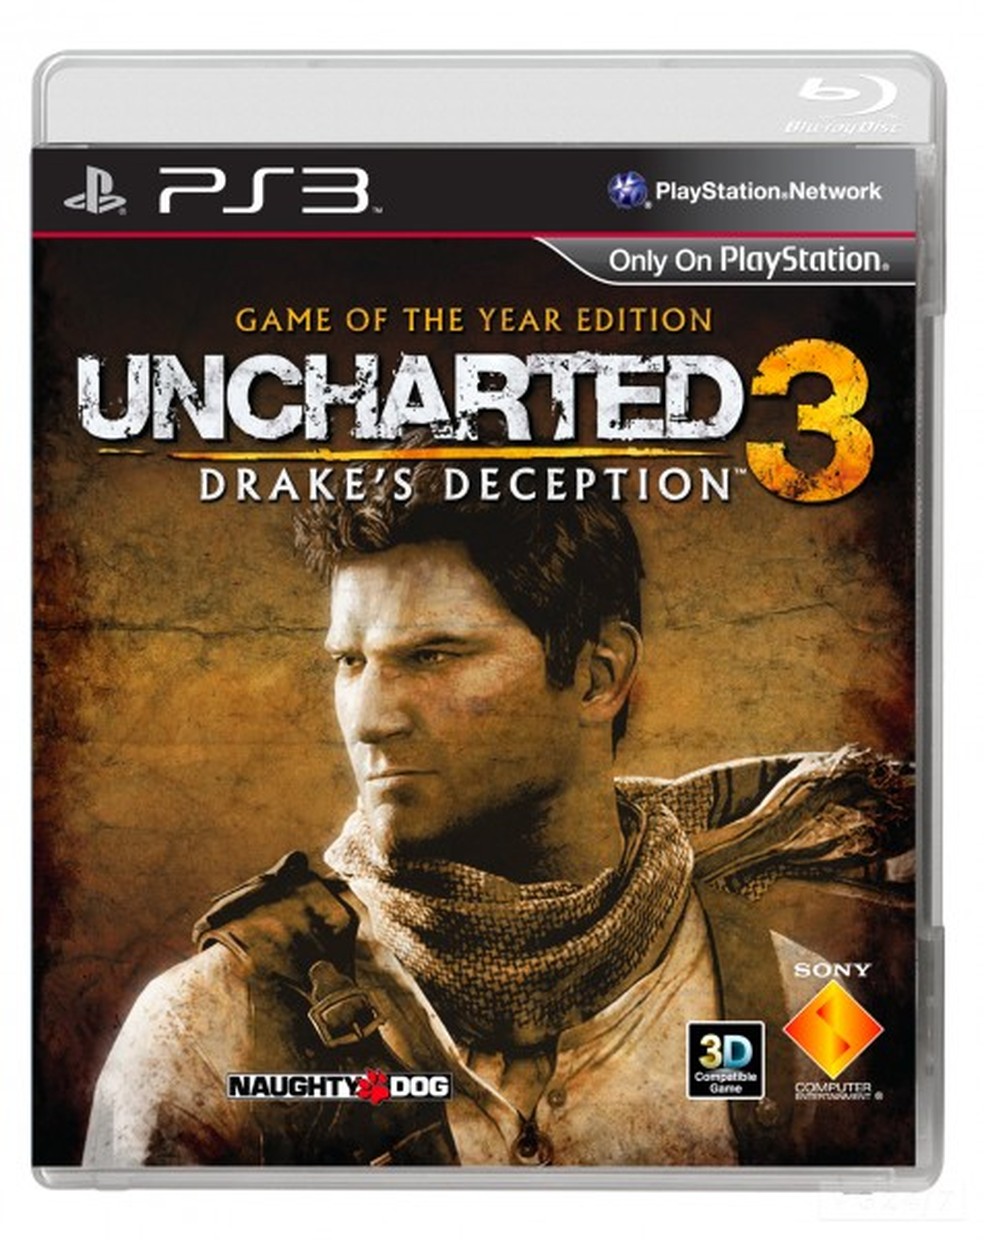 Uncharted 3 completa 10 anos de sua estreia - GAMECOIN